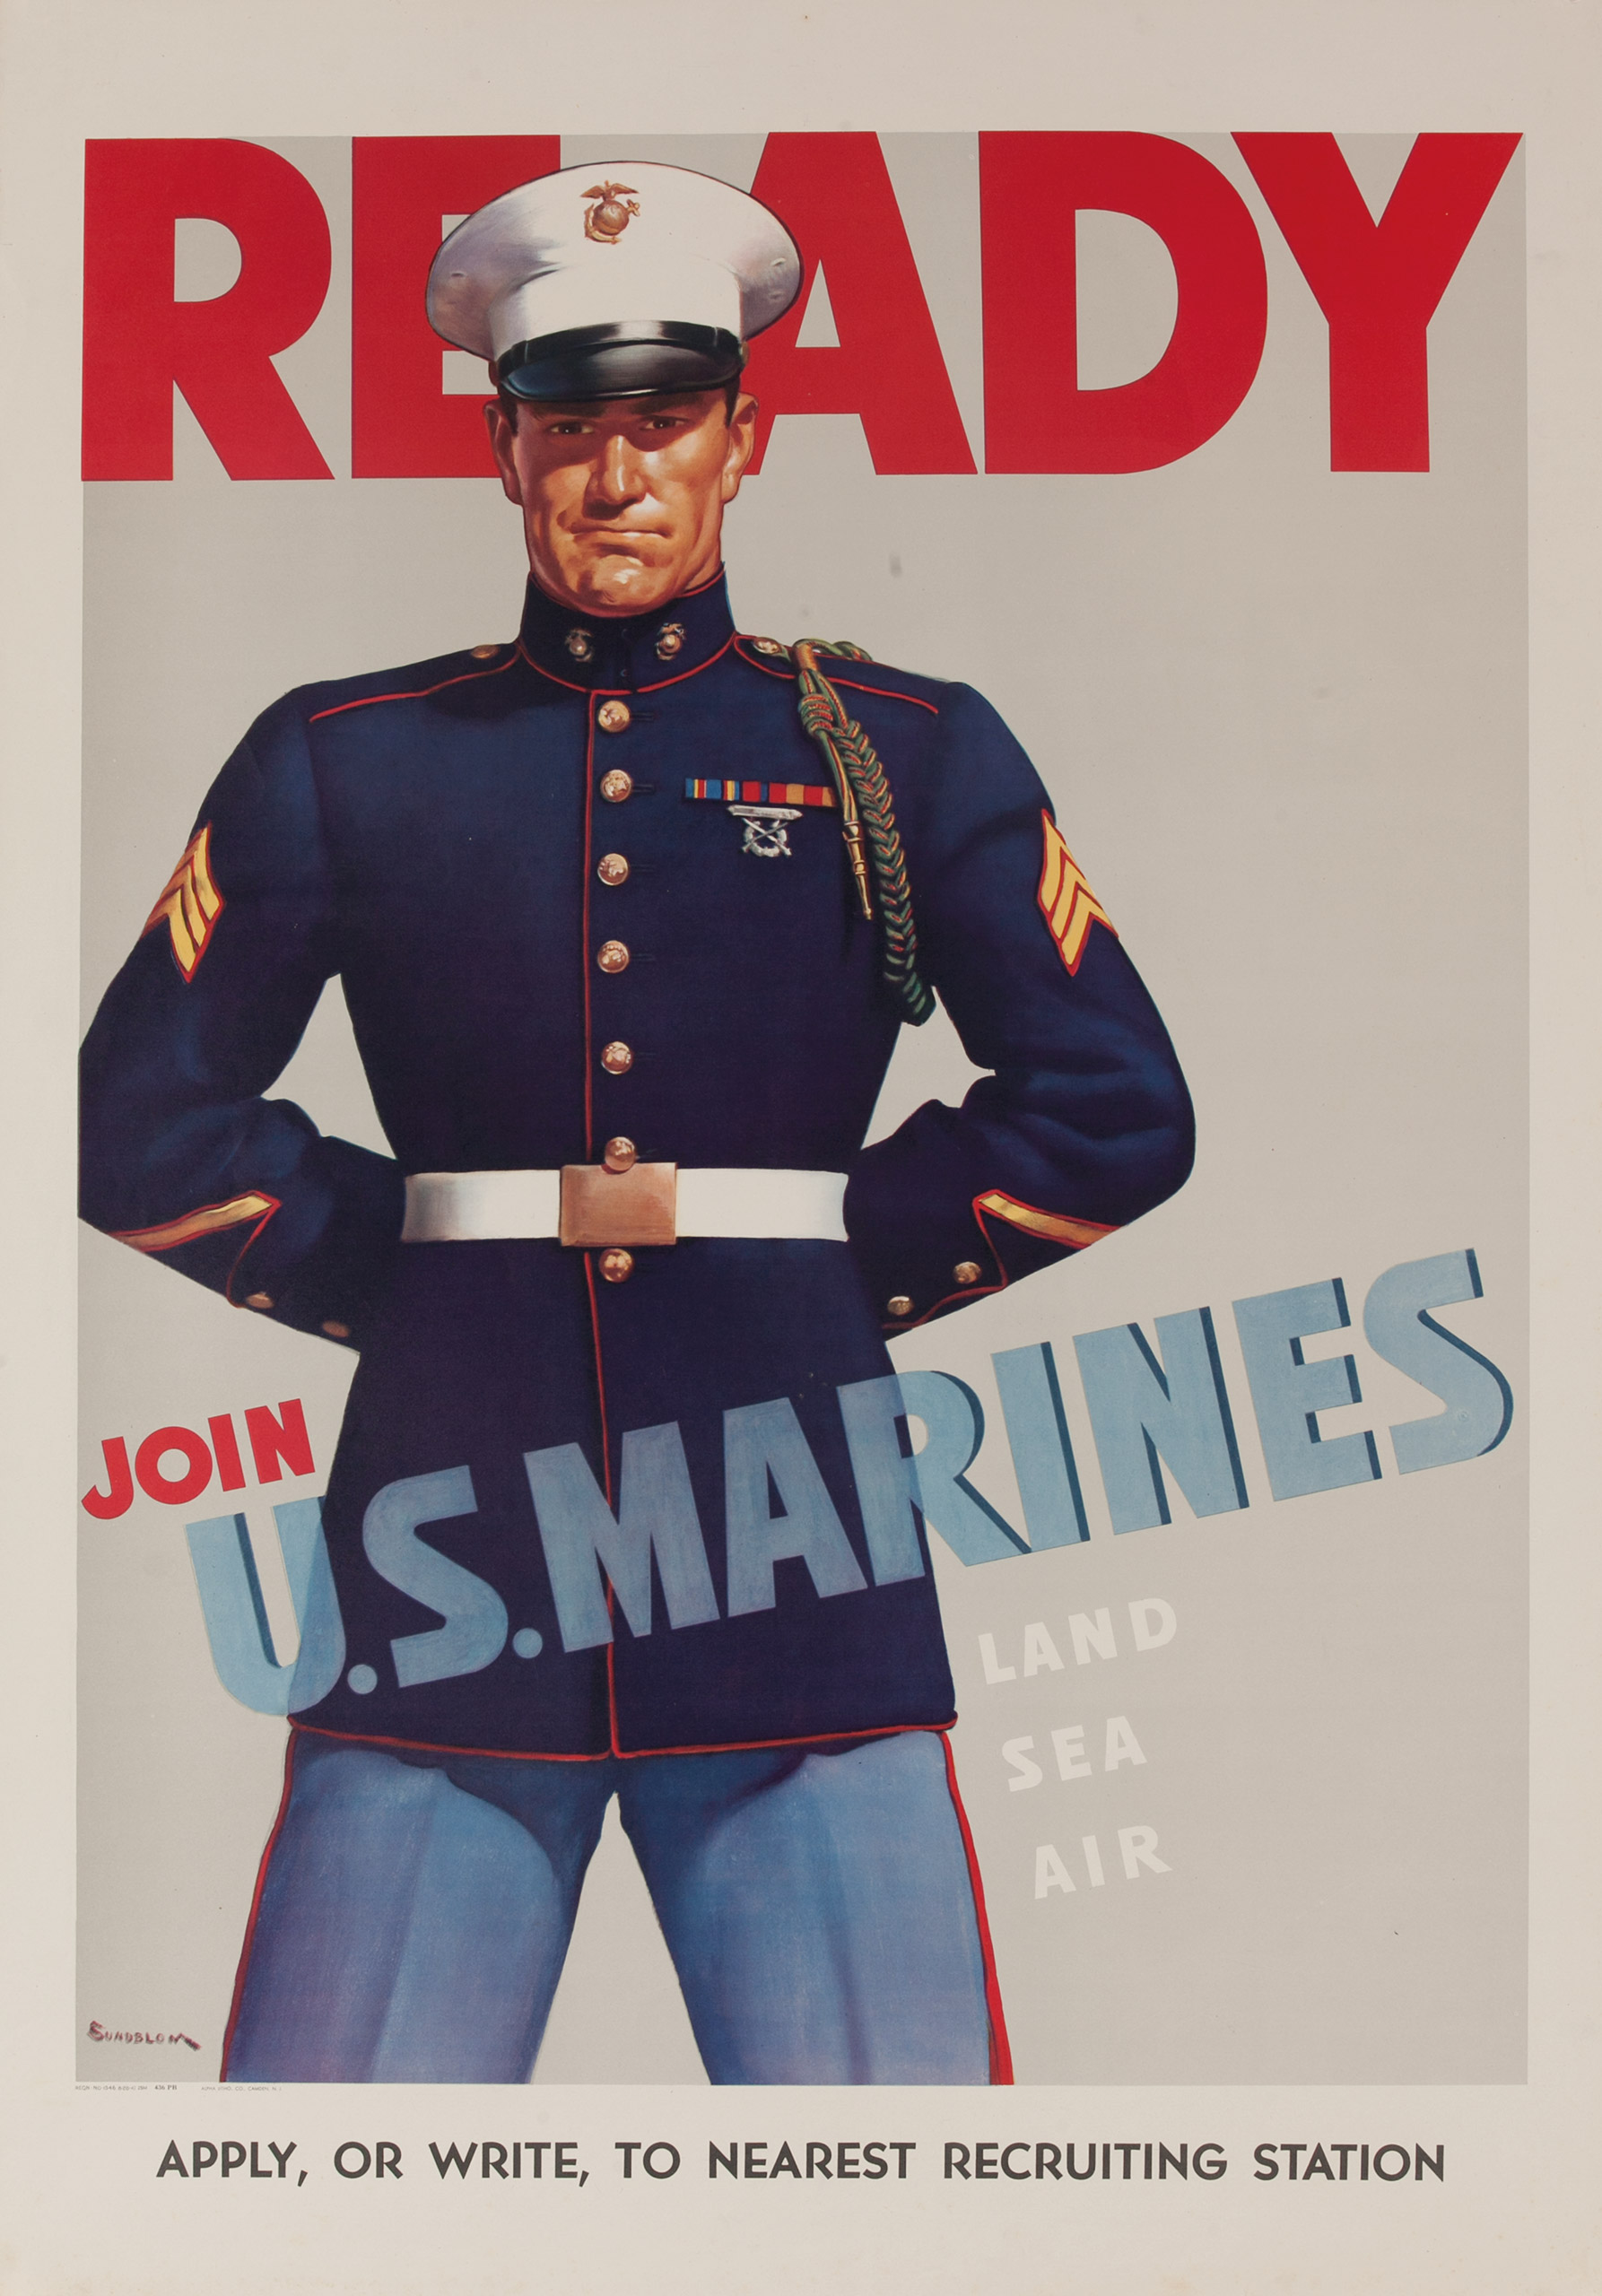 U.S. Marines 1942 war poster.